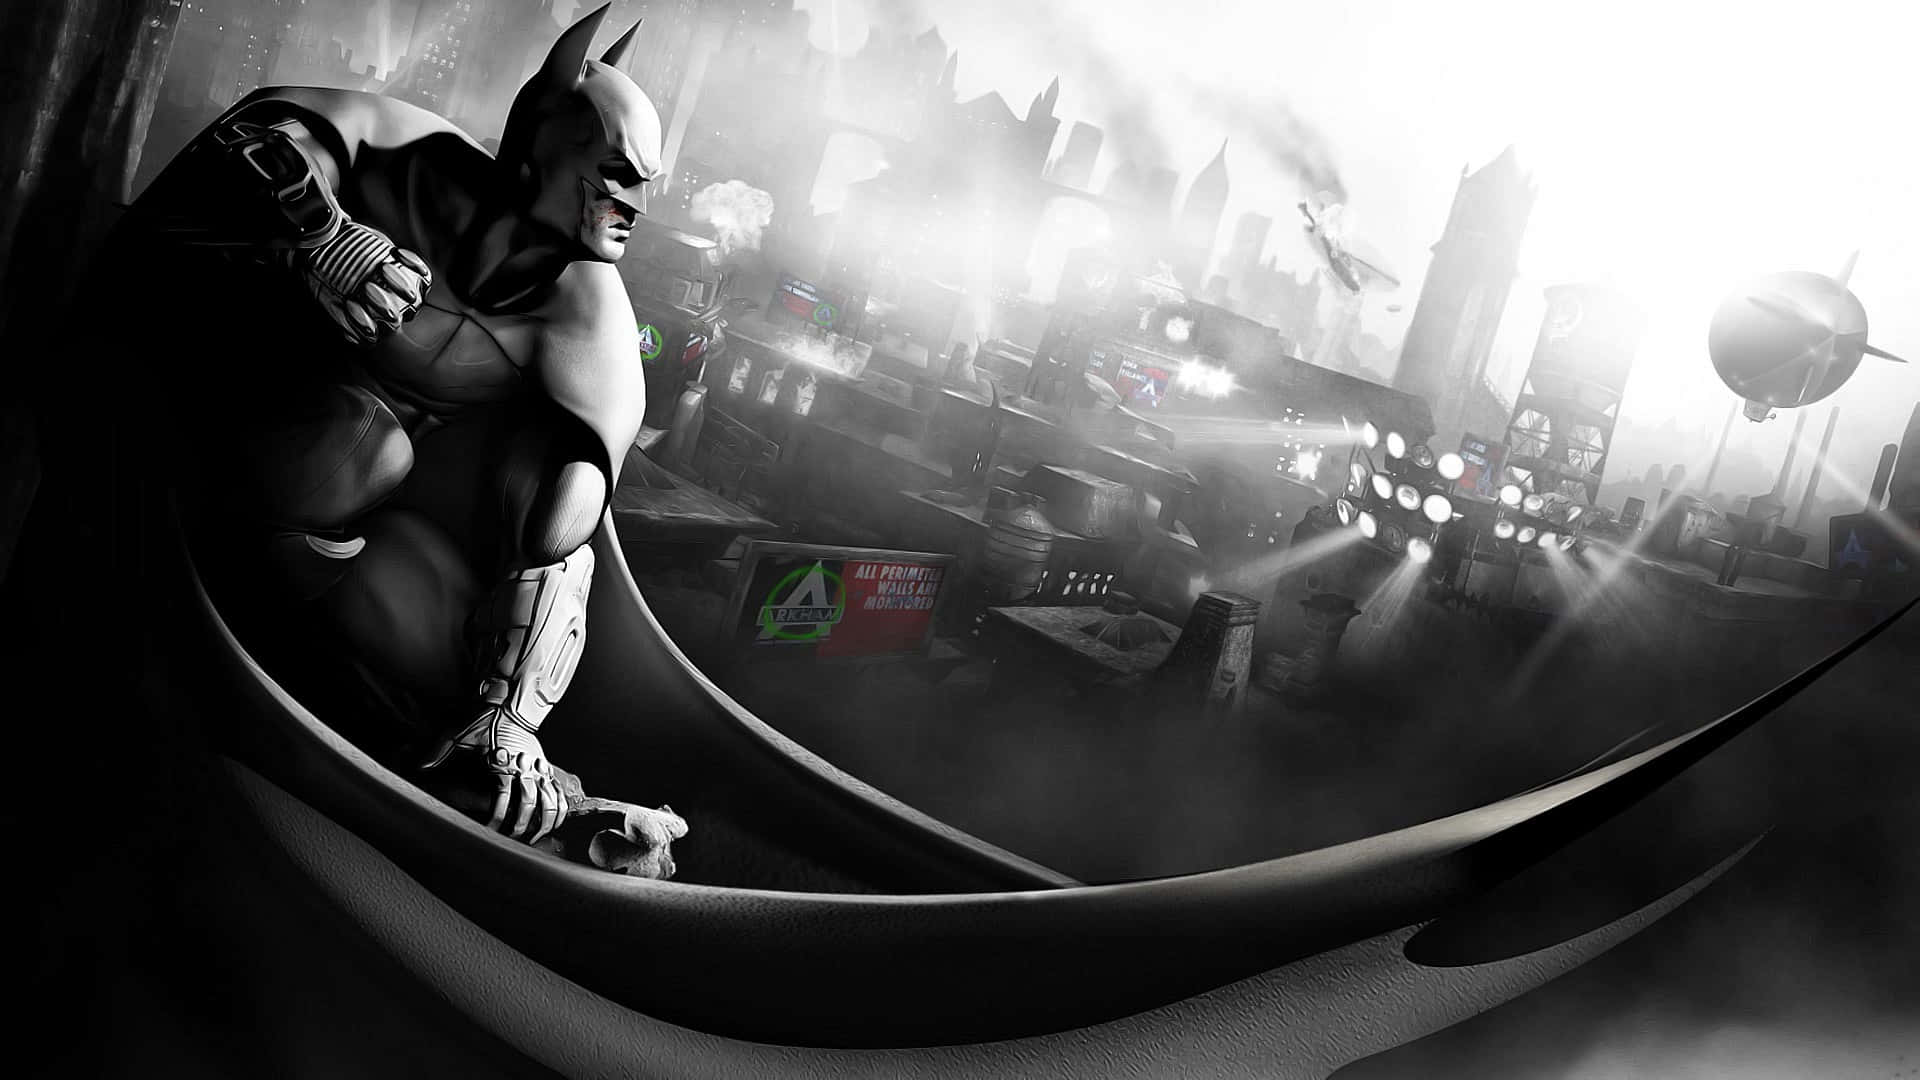 Batman faces his enemies in the dark alleys of Arkham City